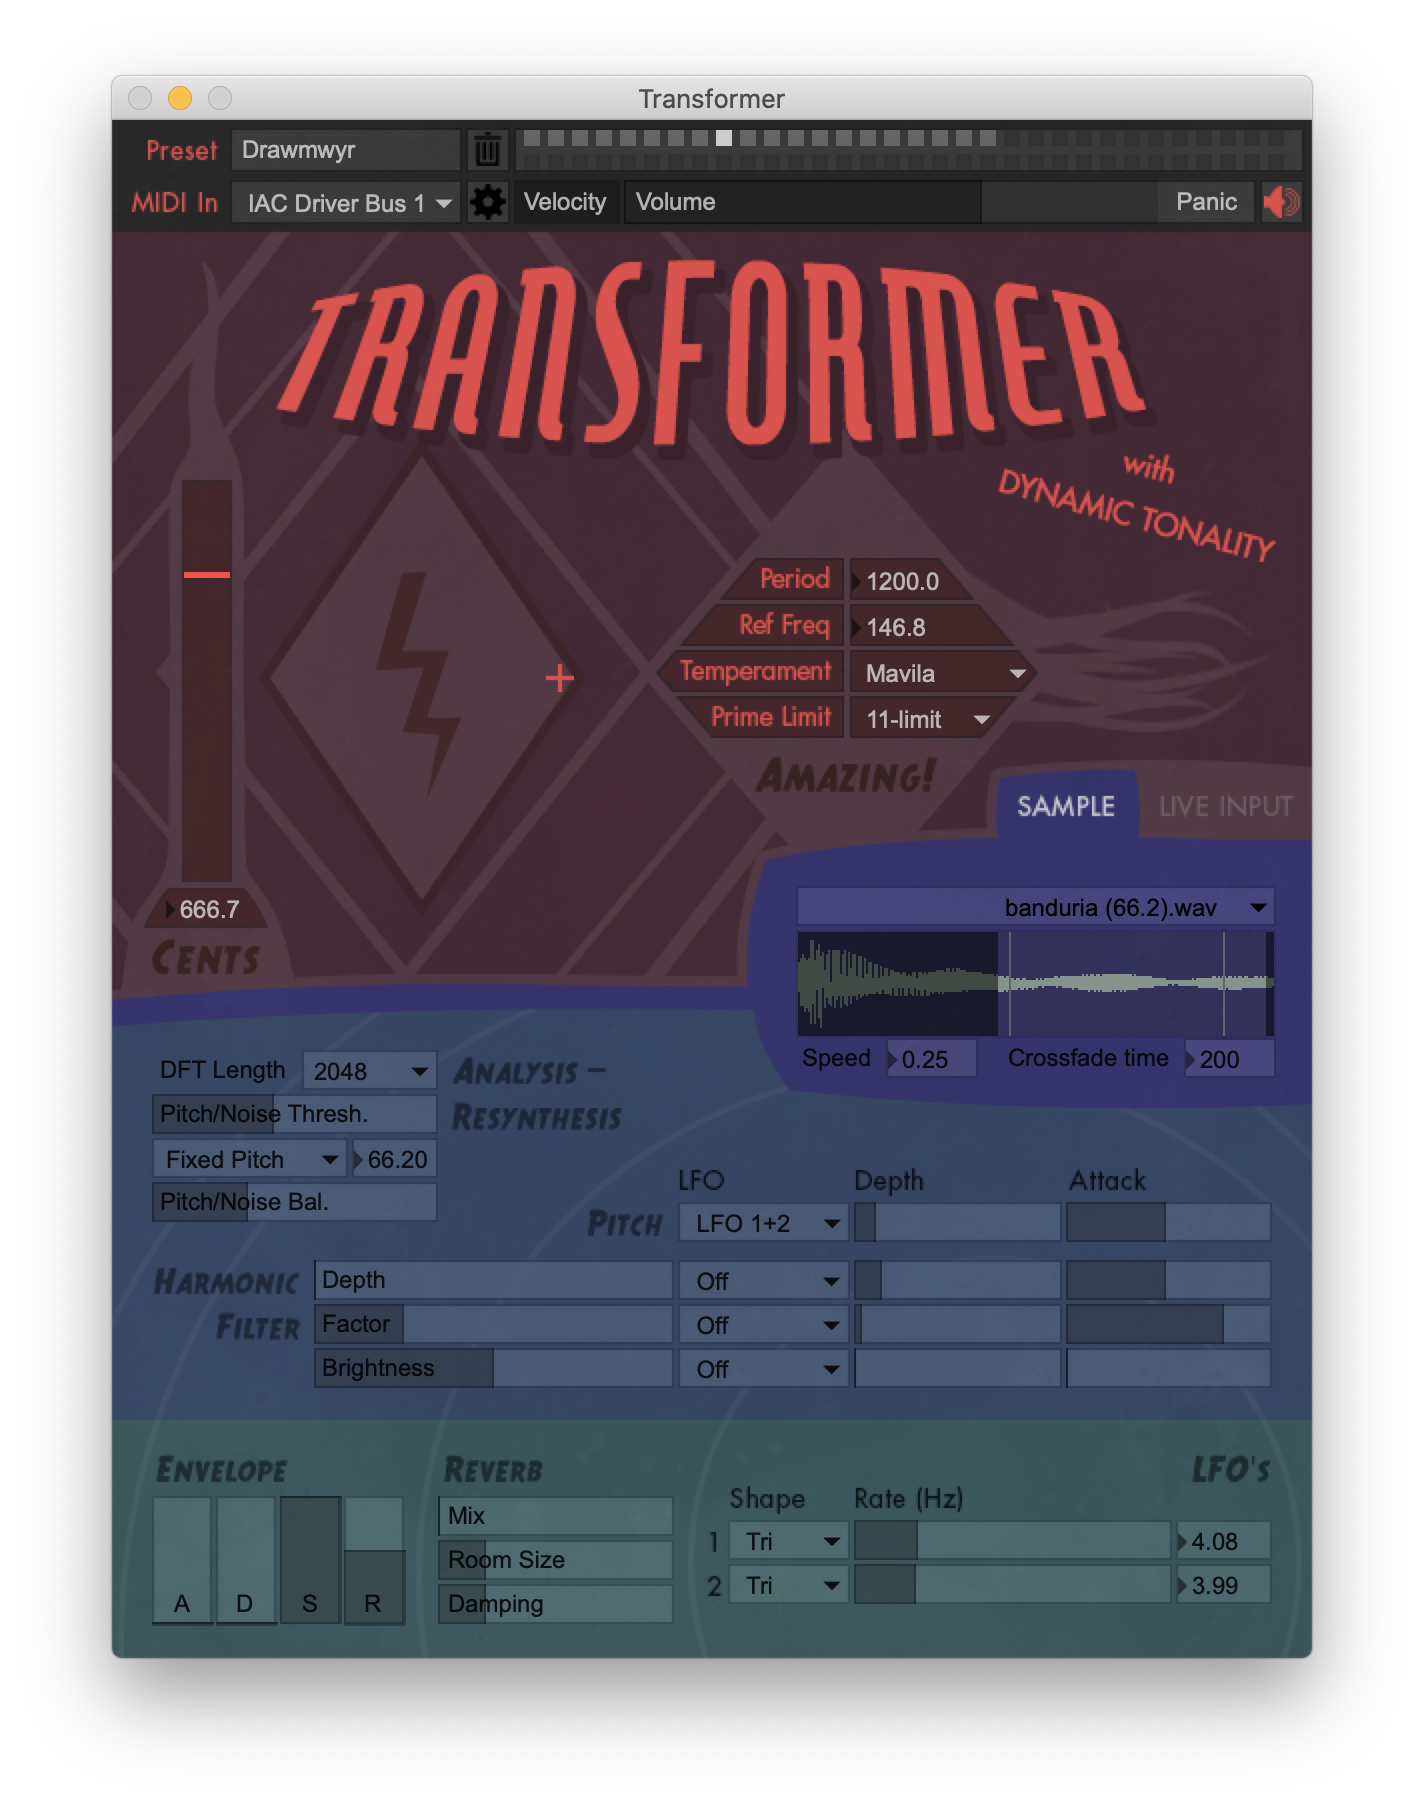 Transformer's user interface